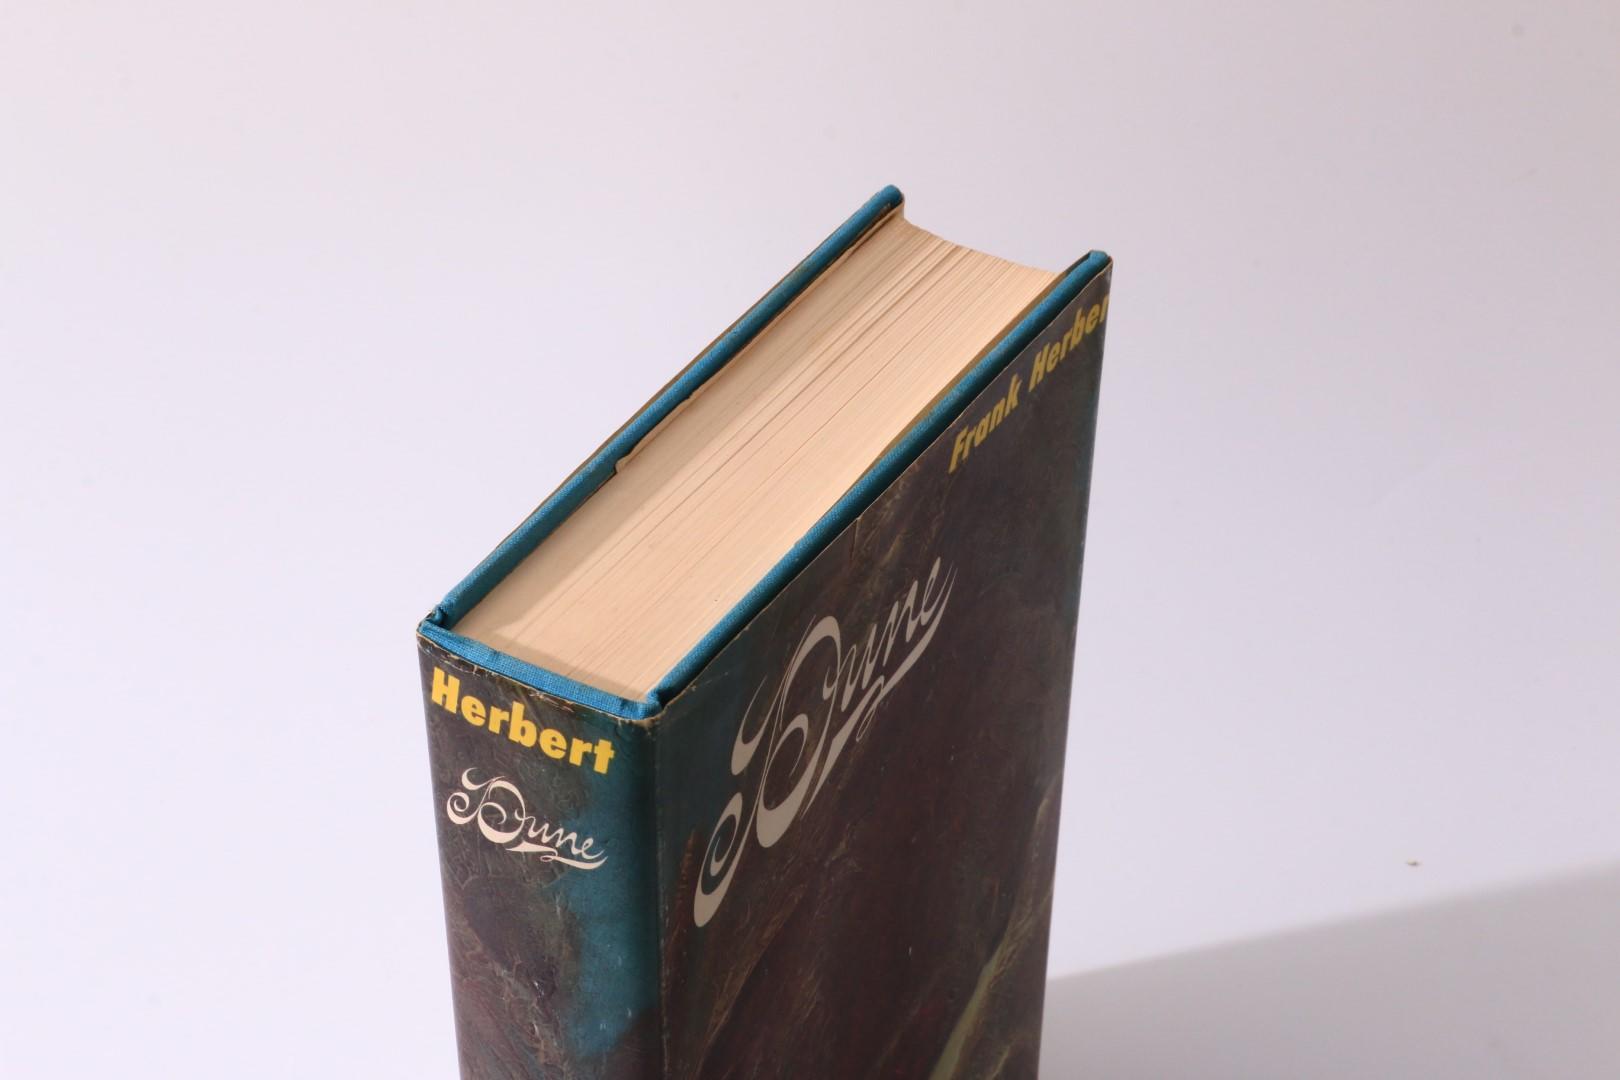 Frank Herbert - Dune - Chilton, 1965, First Edition.